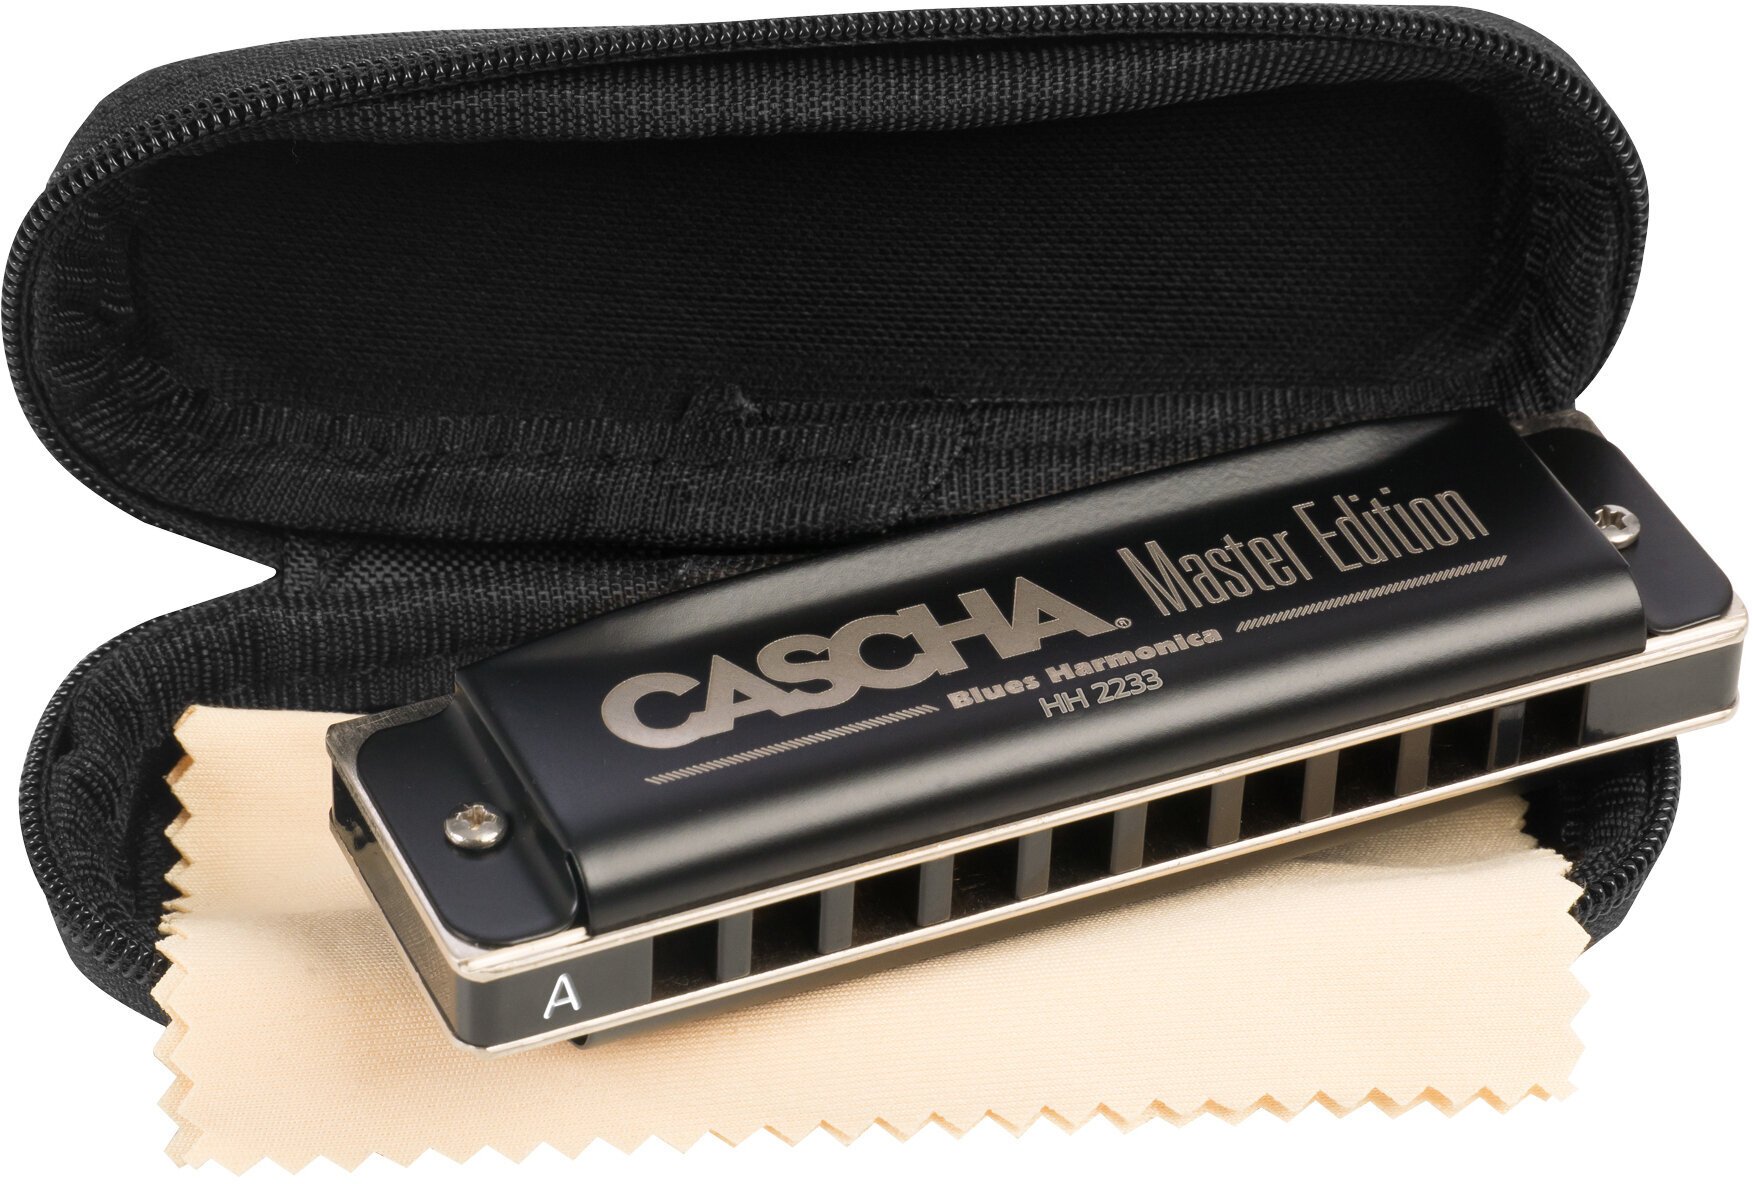 Diatonic harmonica Cascha HH 2233 Master Edition Blues A